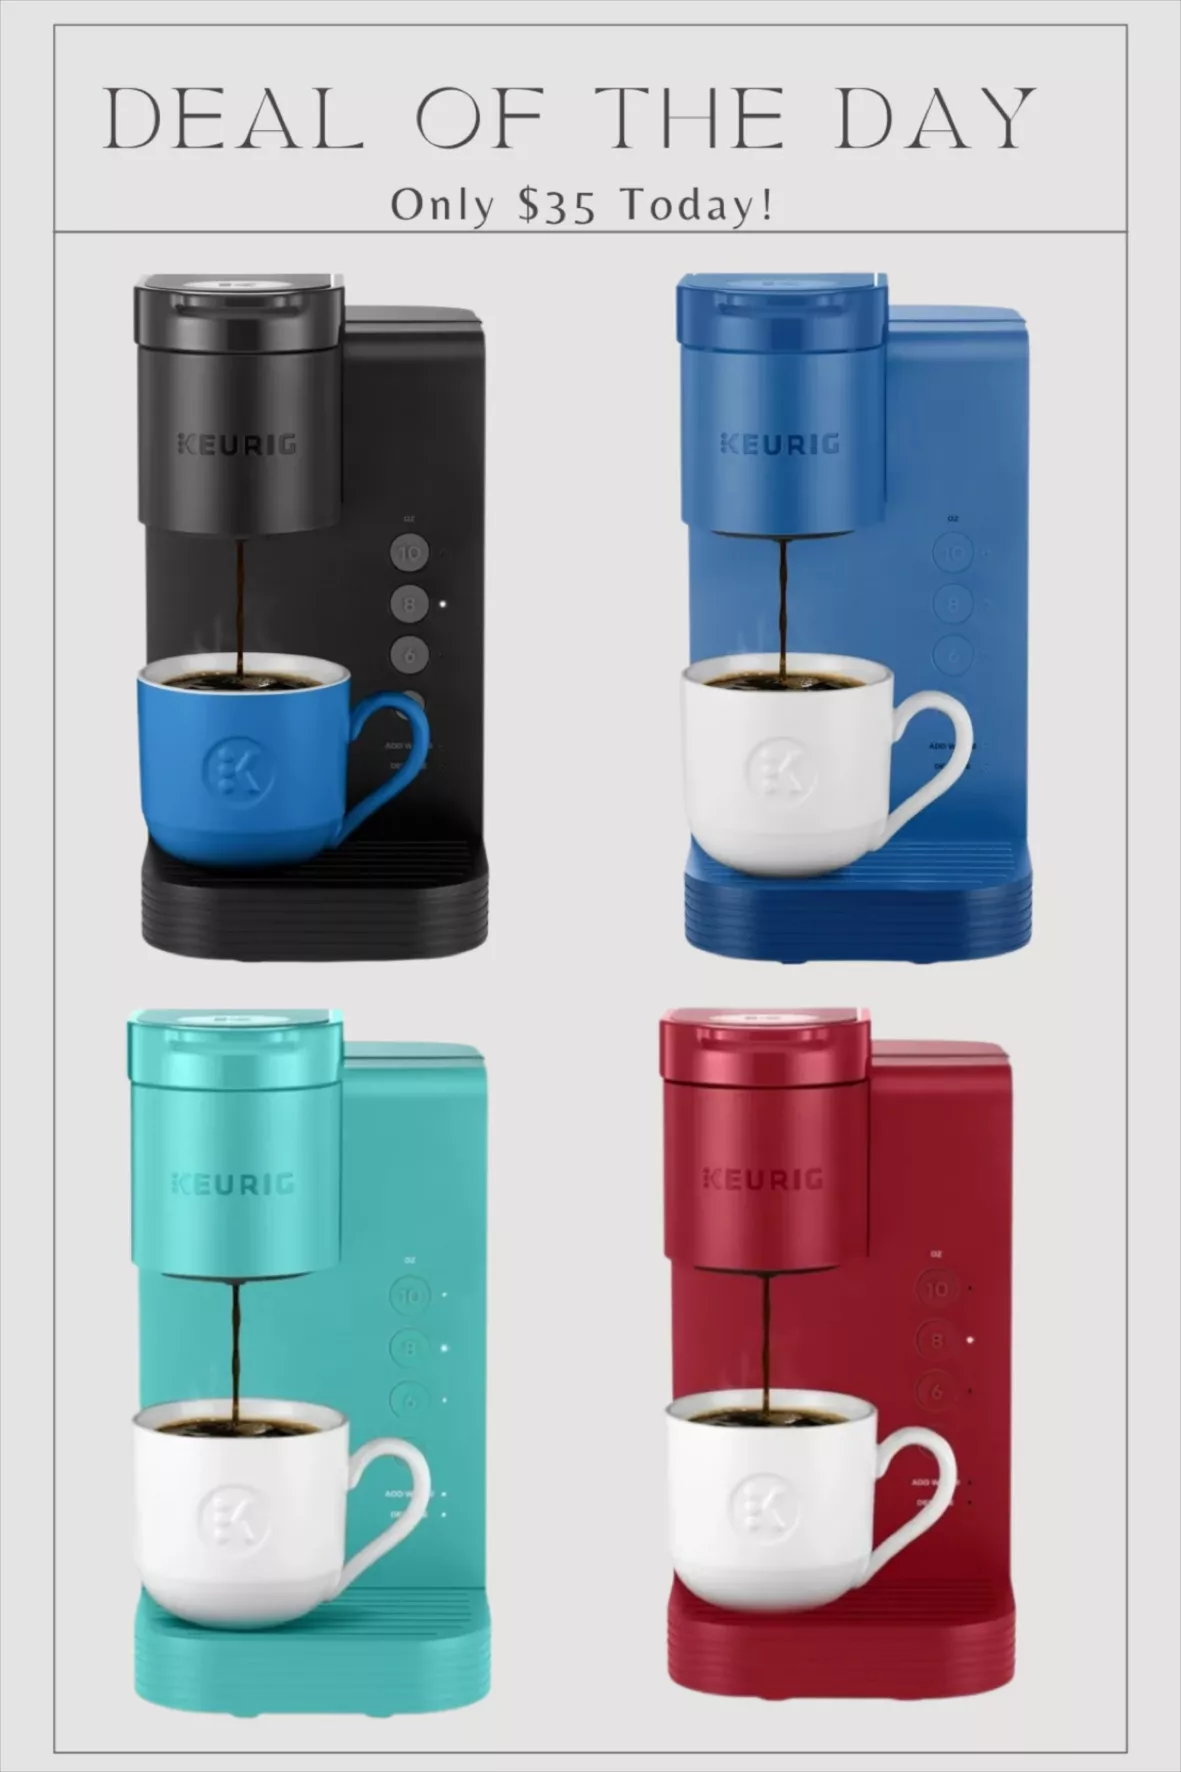 Keurig K-Express K-Cup Pod Coffee Maker, Cloud White Single Serve